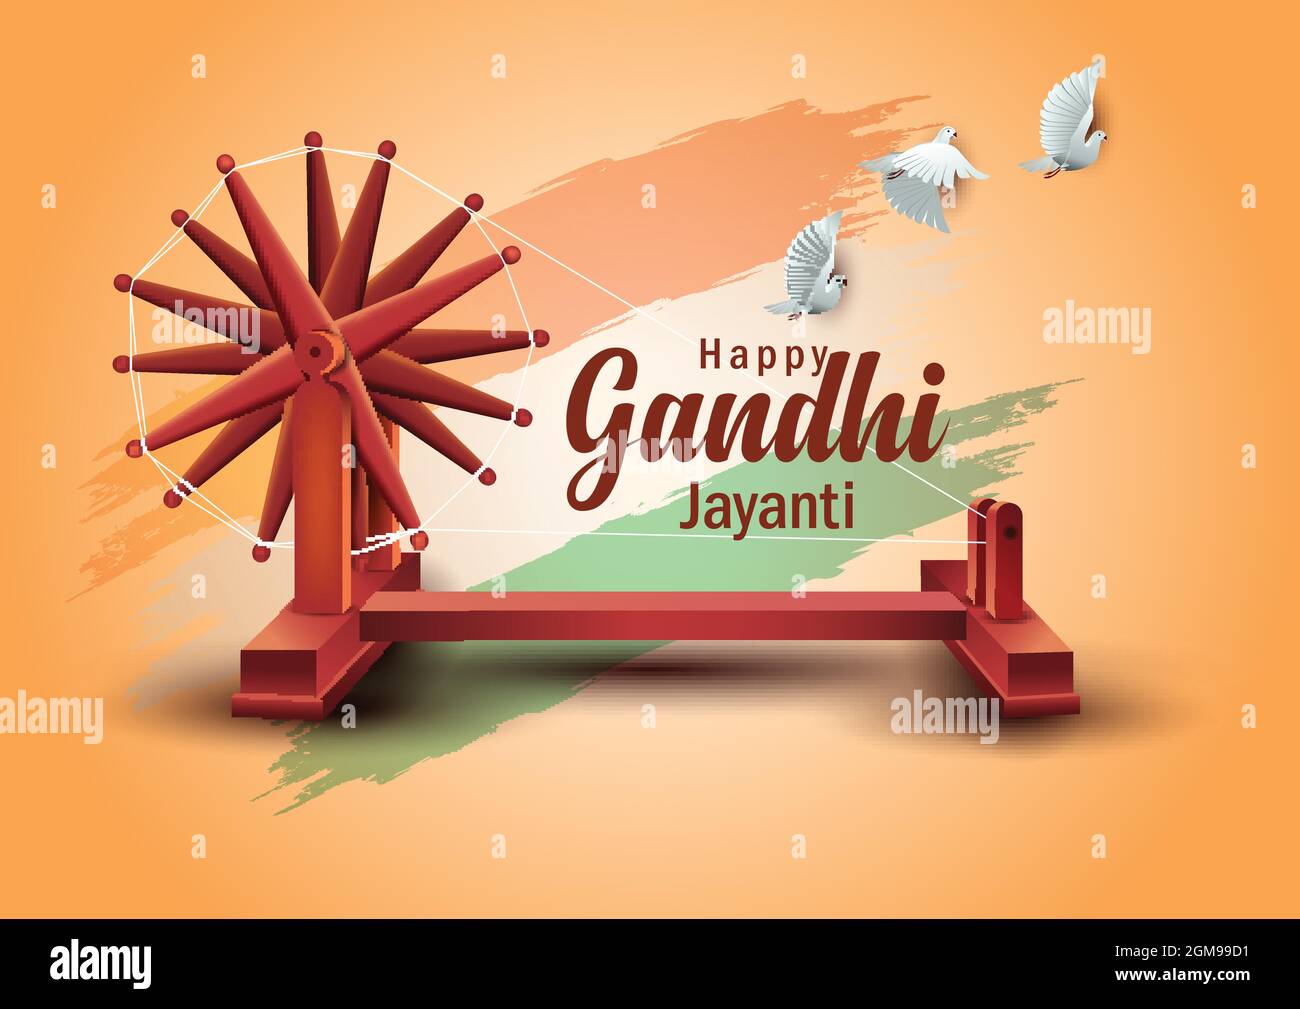 Mahatma Gandhi jayanti 2 octobre avec dessin créatif vecteur illustration, Mohandas Karam Chandra Gandhi anniversaire. Illustration de Vecteur